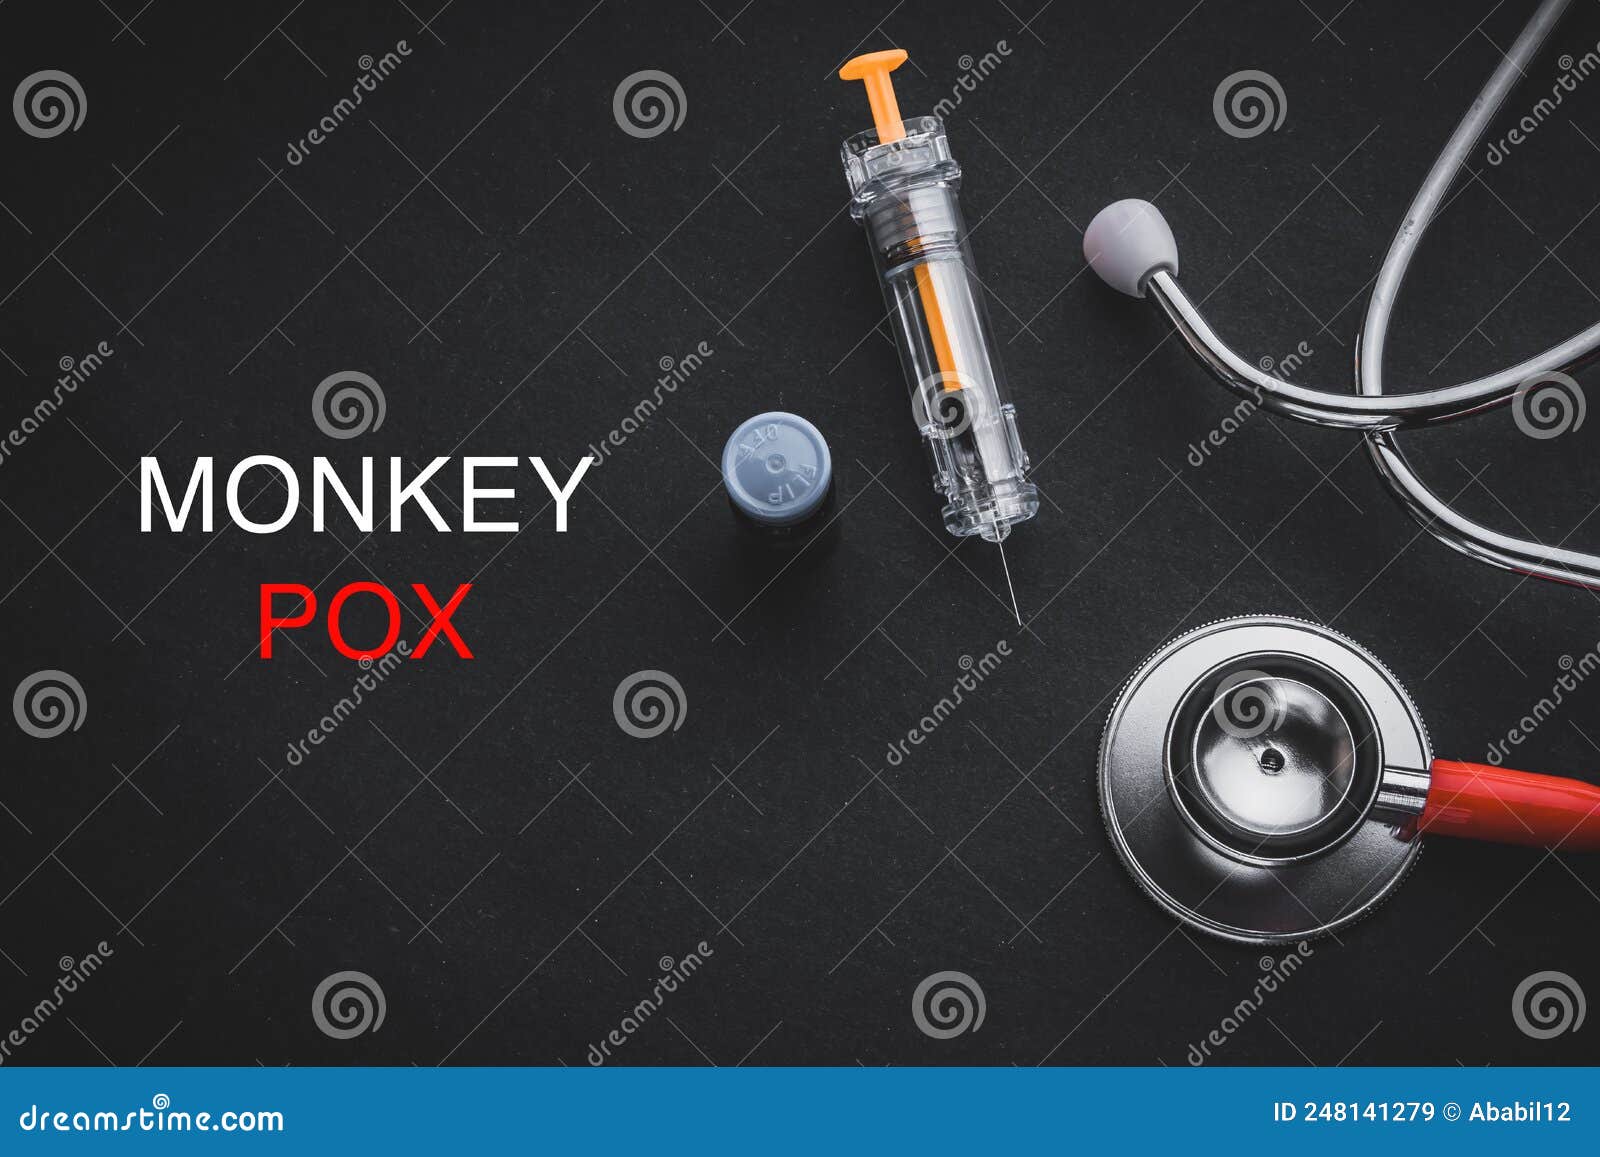 monkeypox words written with stethoscope, syringe and vaccine bottle on black background.